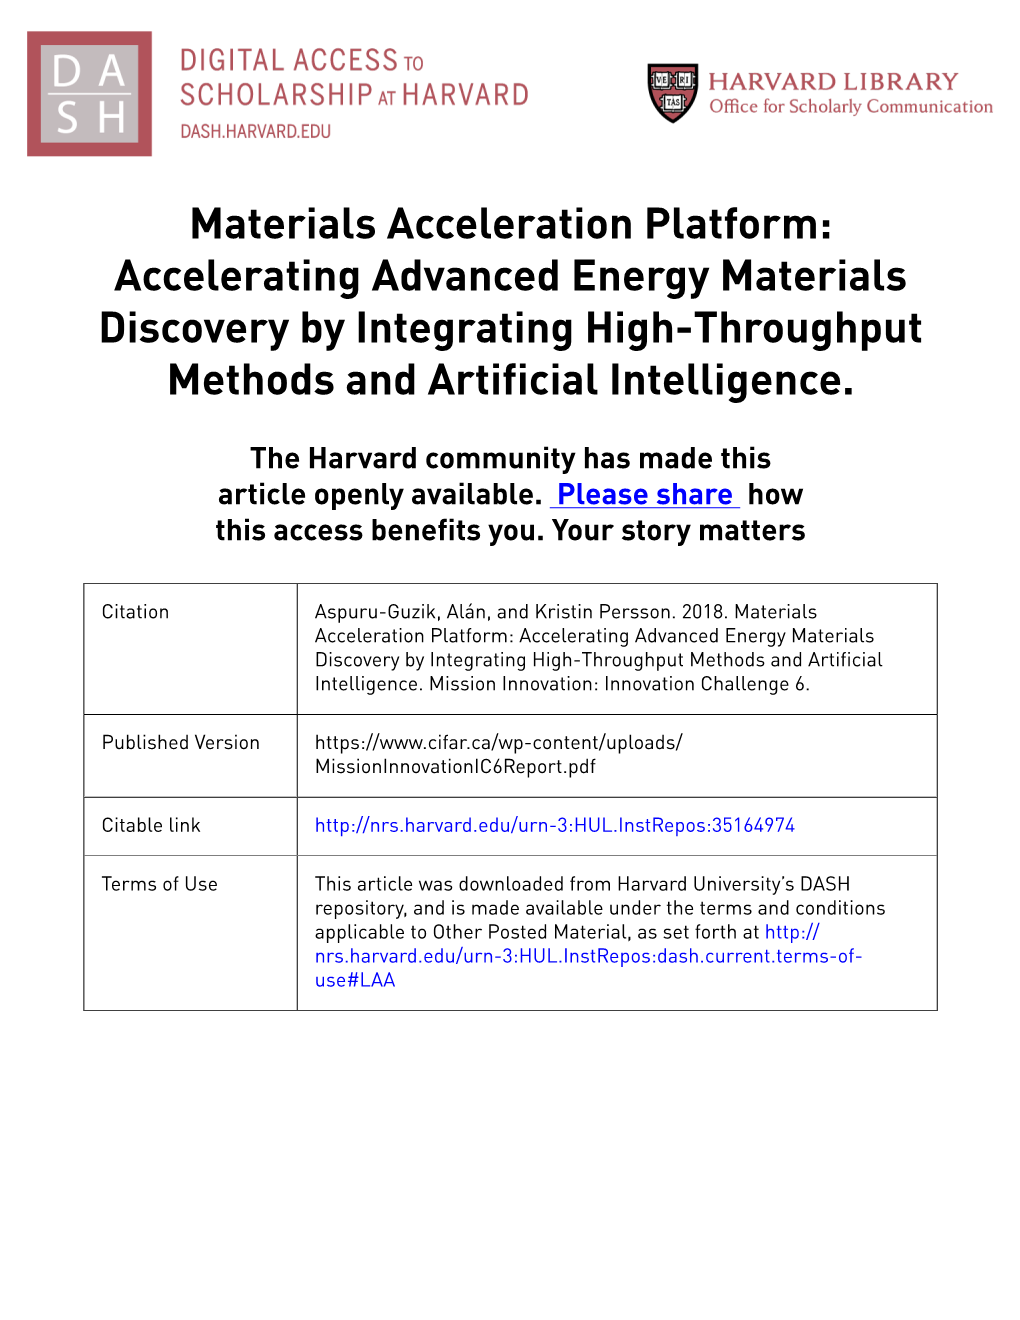 Materials Acceleration Platform—Accelerating Advanced Energy